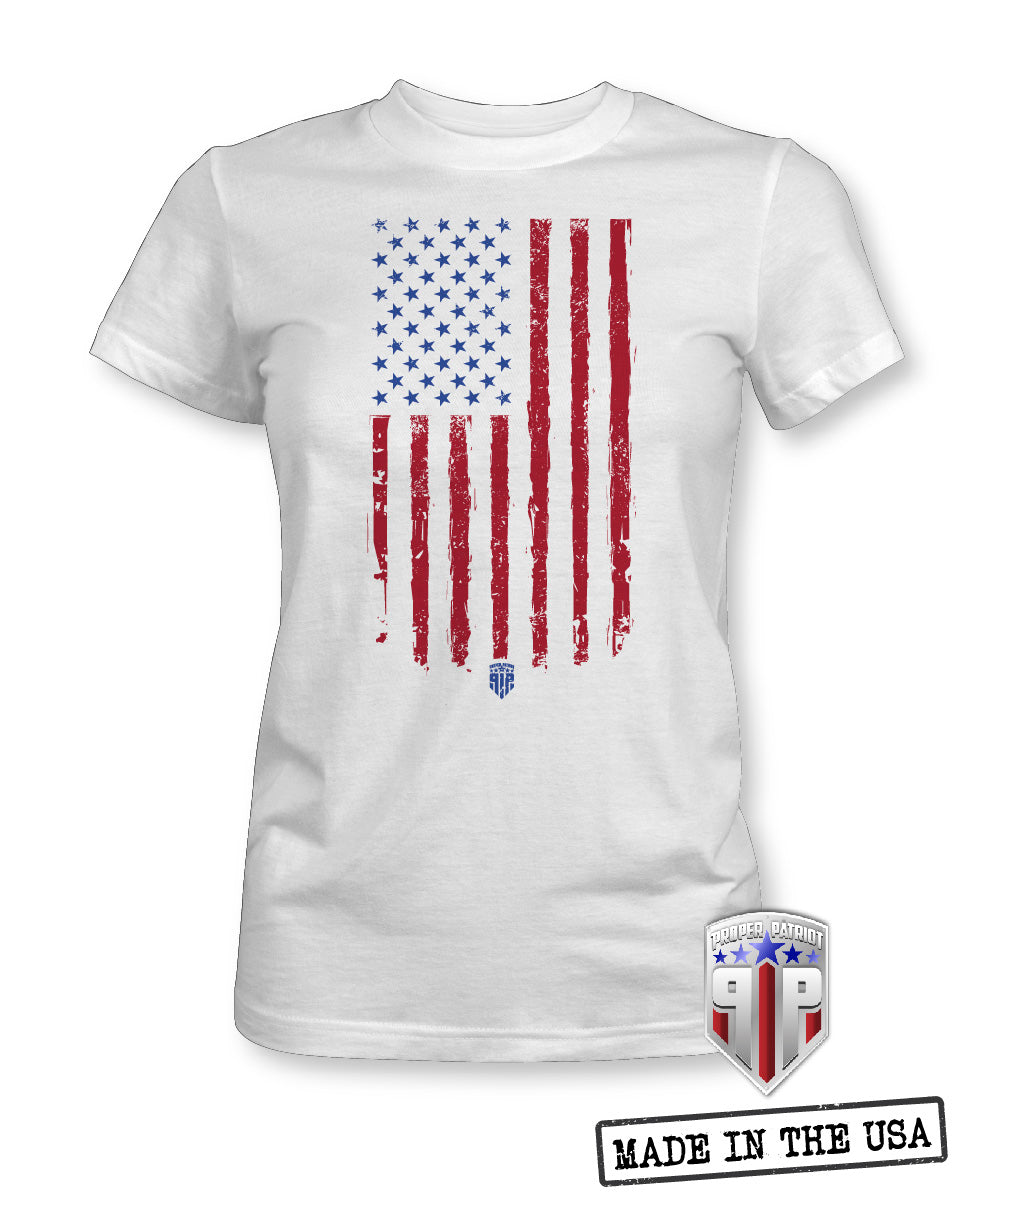 Tattered American Flag - USA Apparel Shirts - Women's Patriotic Shirts - Proper Patriot